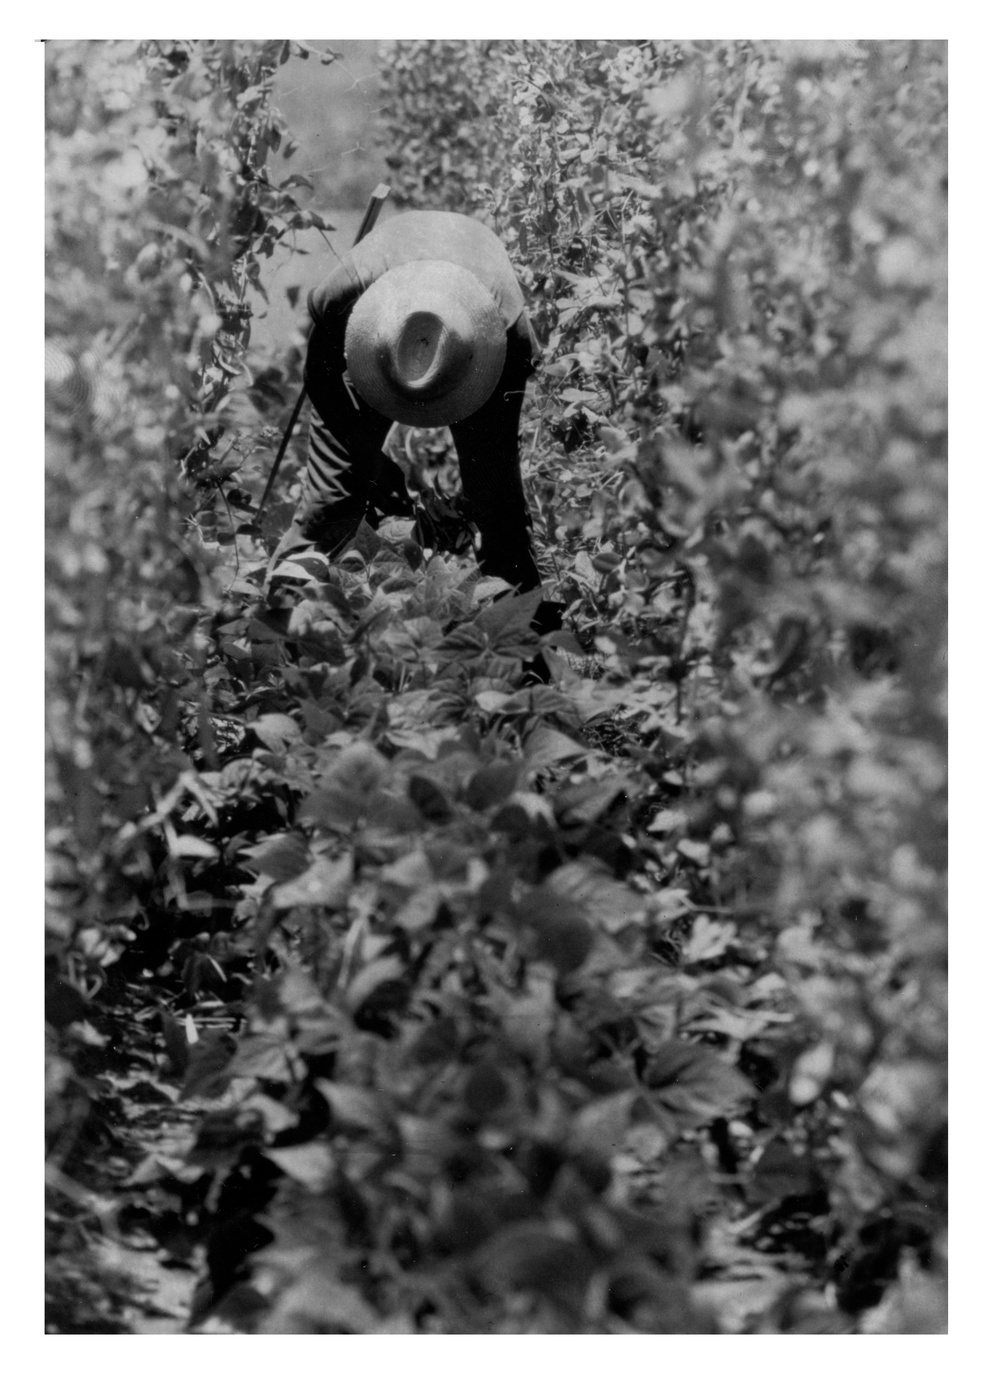 Worker tending to crops in Guatemala